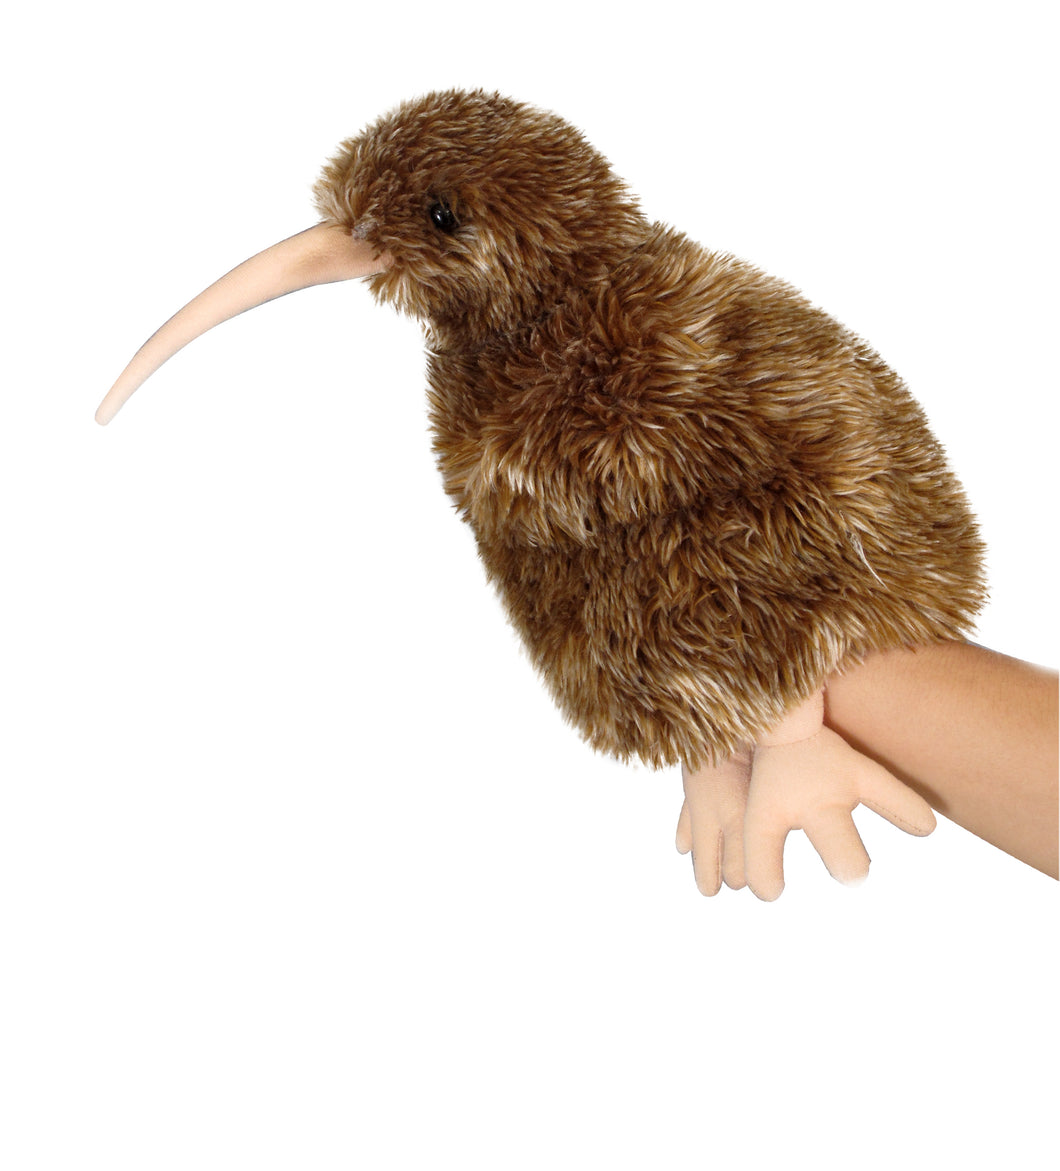 Kiwi puppet